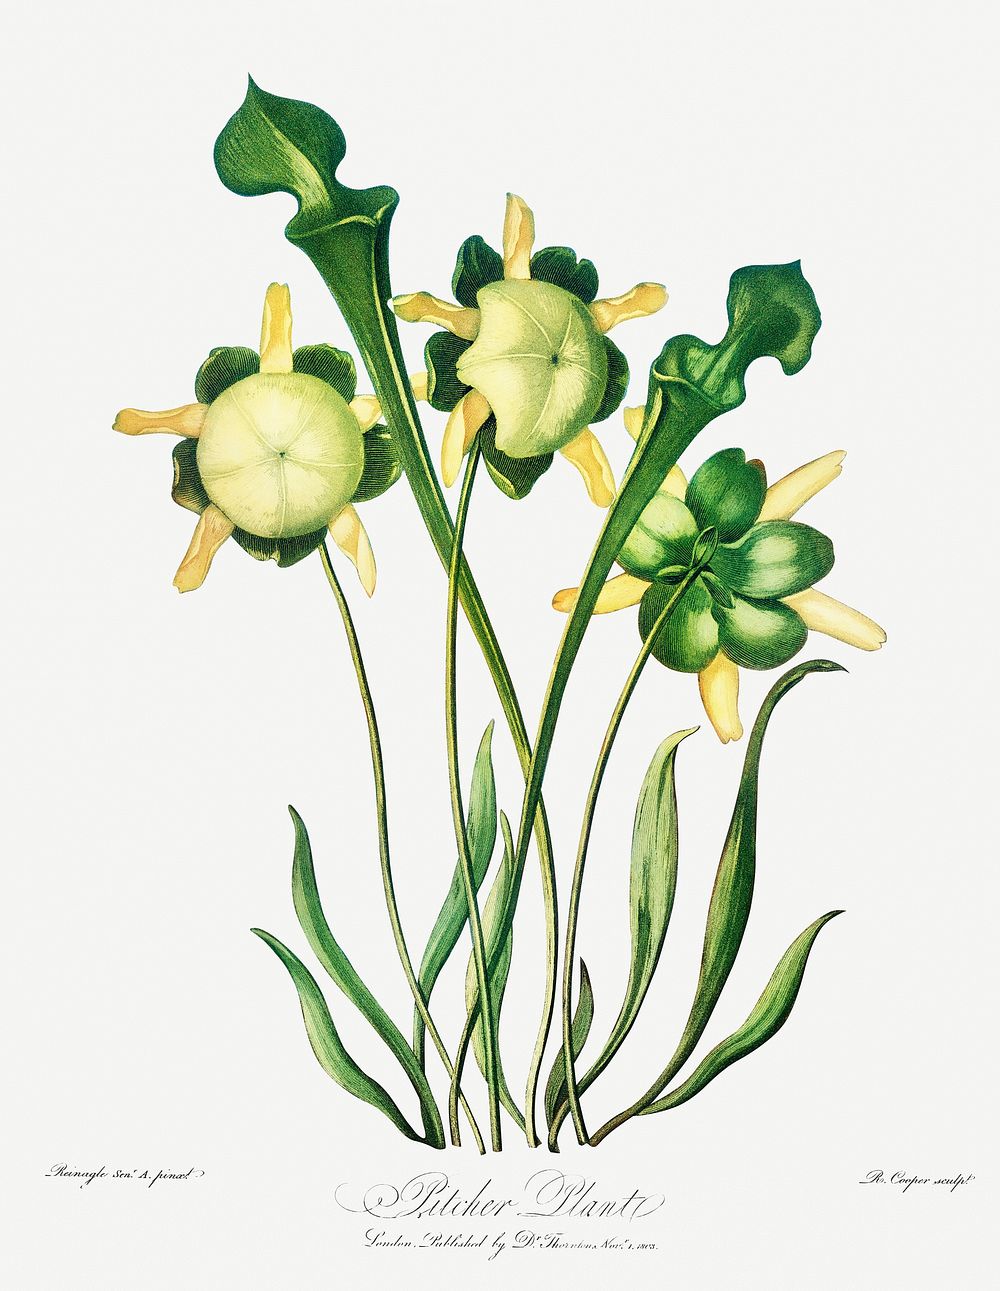 Pitcher Plant illustration